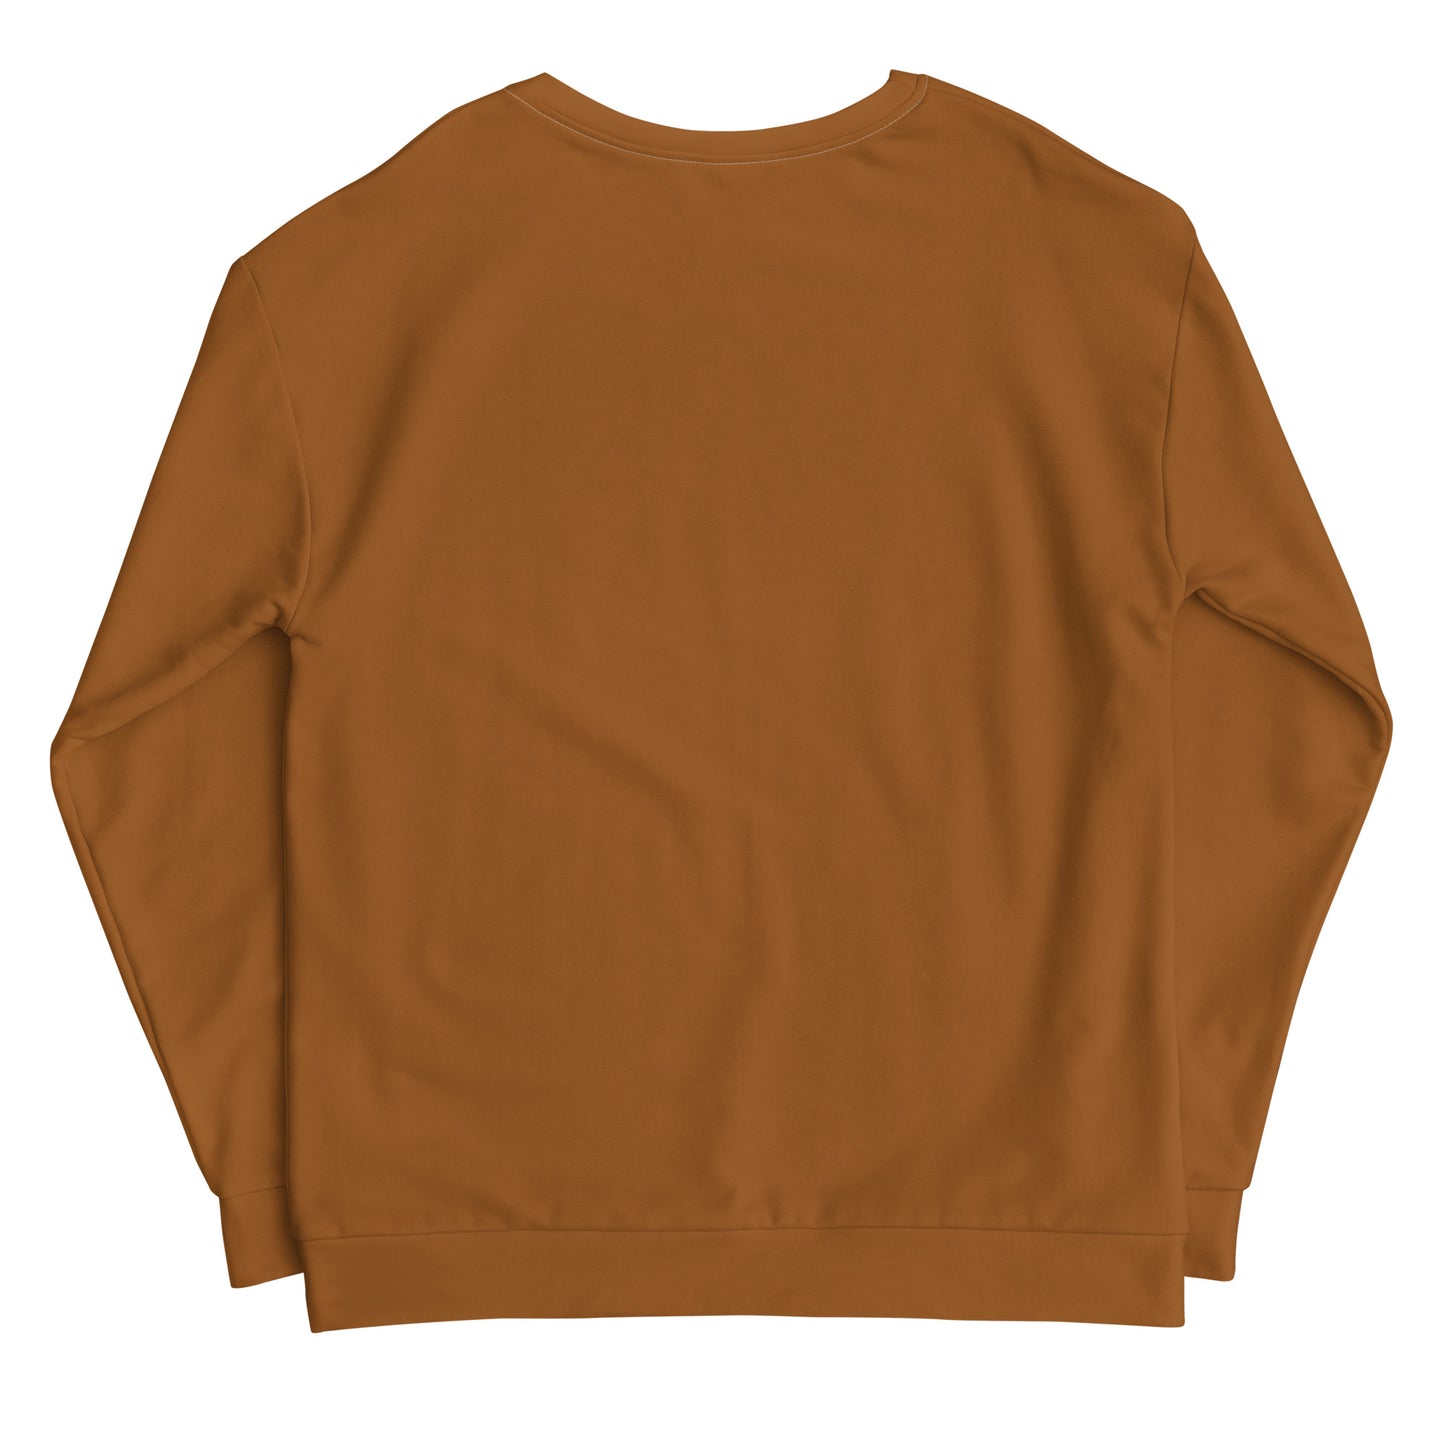 Klasik - Inspired By Taylor Swift - Sustainably Made Sweatshirt